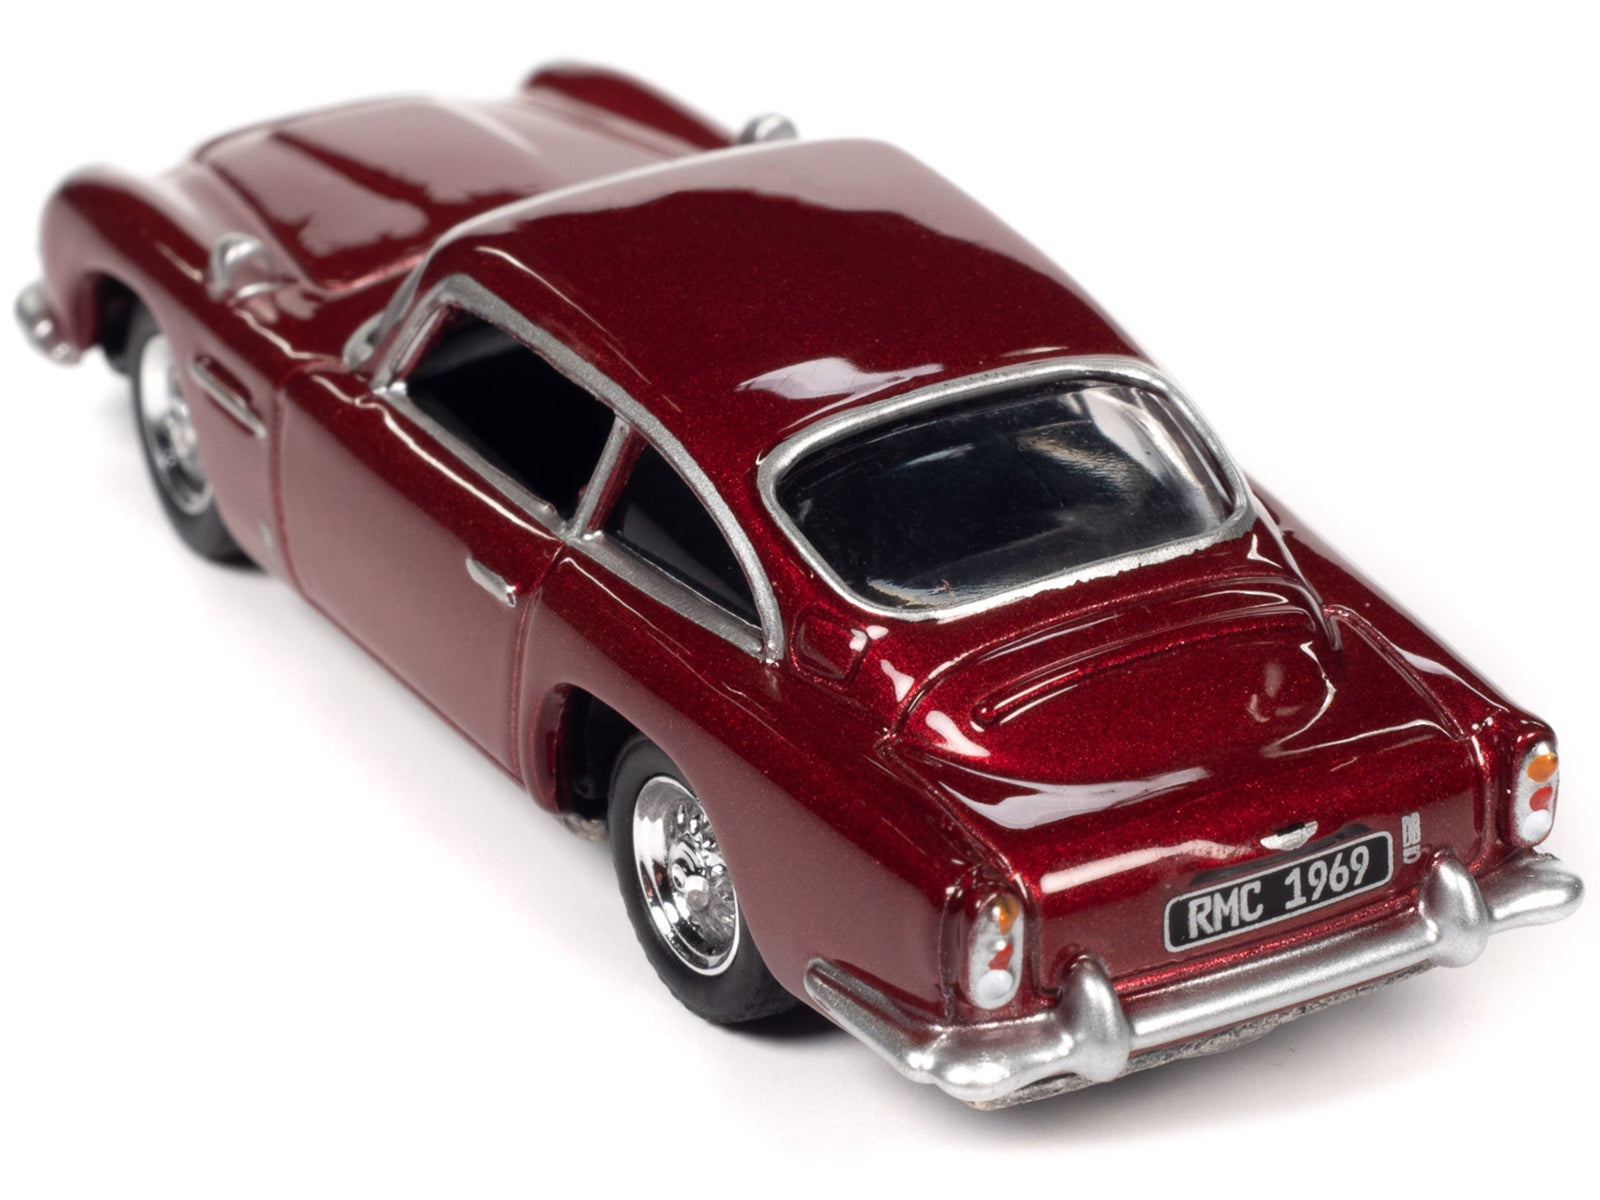 Johnny Lightning 1/64: 1966 Aston Martin DB5 RHD Rossa Rubina Chiara Red Metallic "Classic Gold Collection" 2023 Ltd. Ed. (4428 pieces Worldwide)